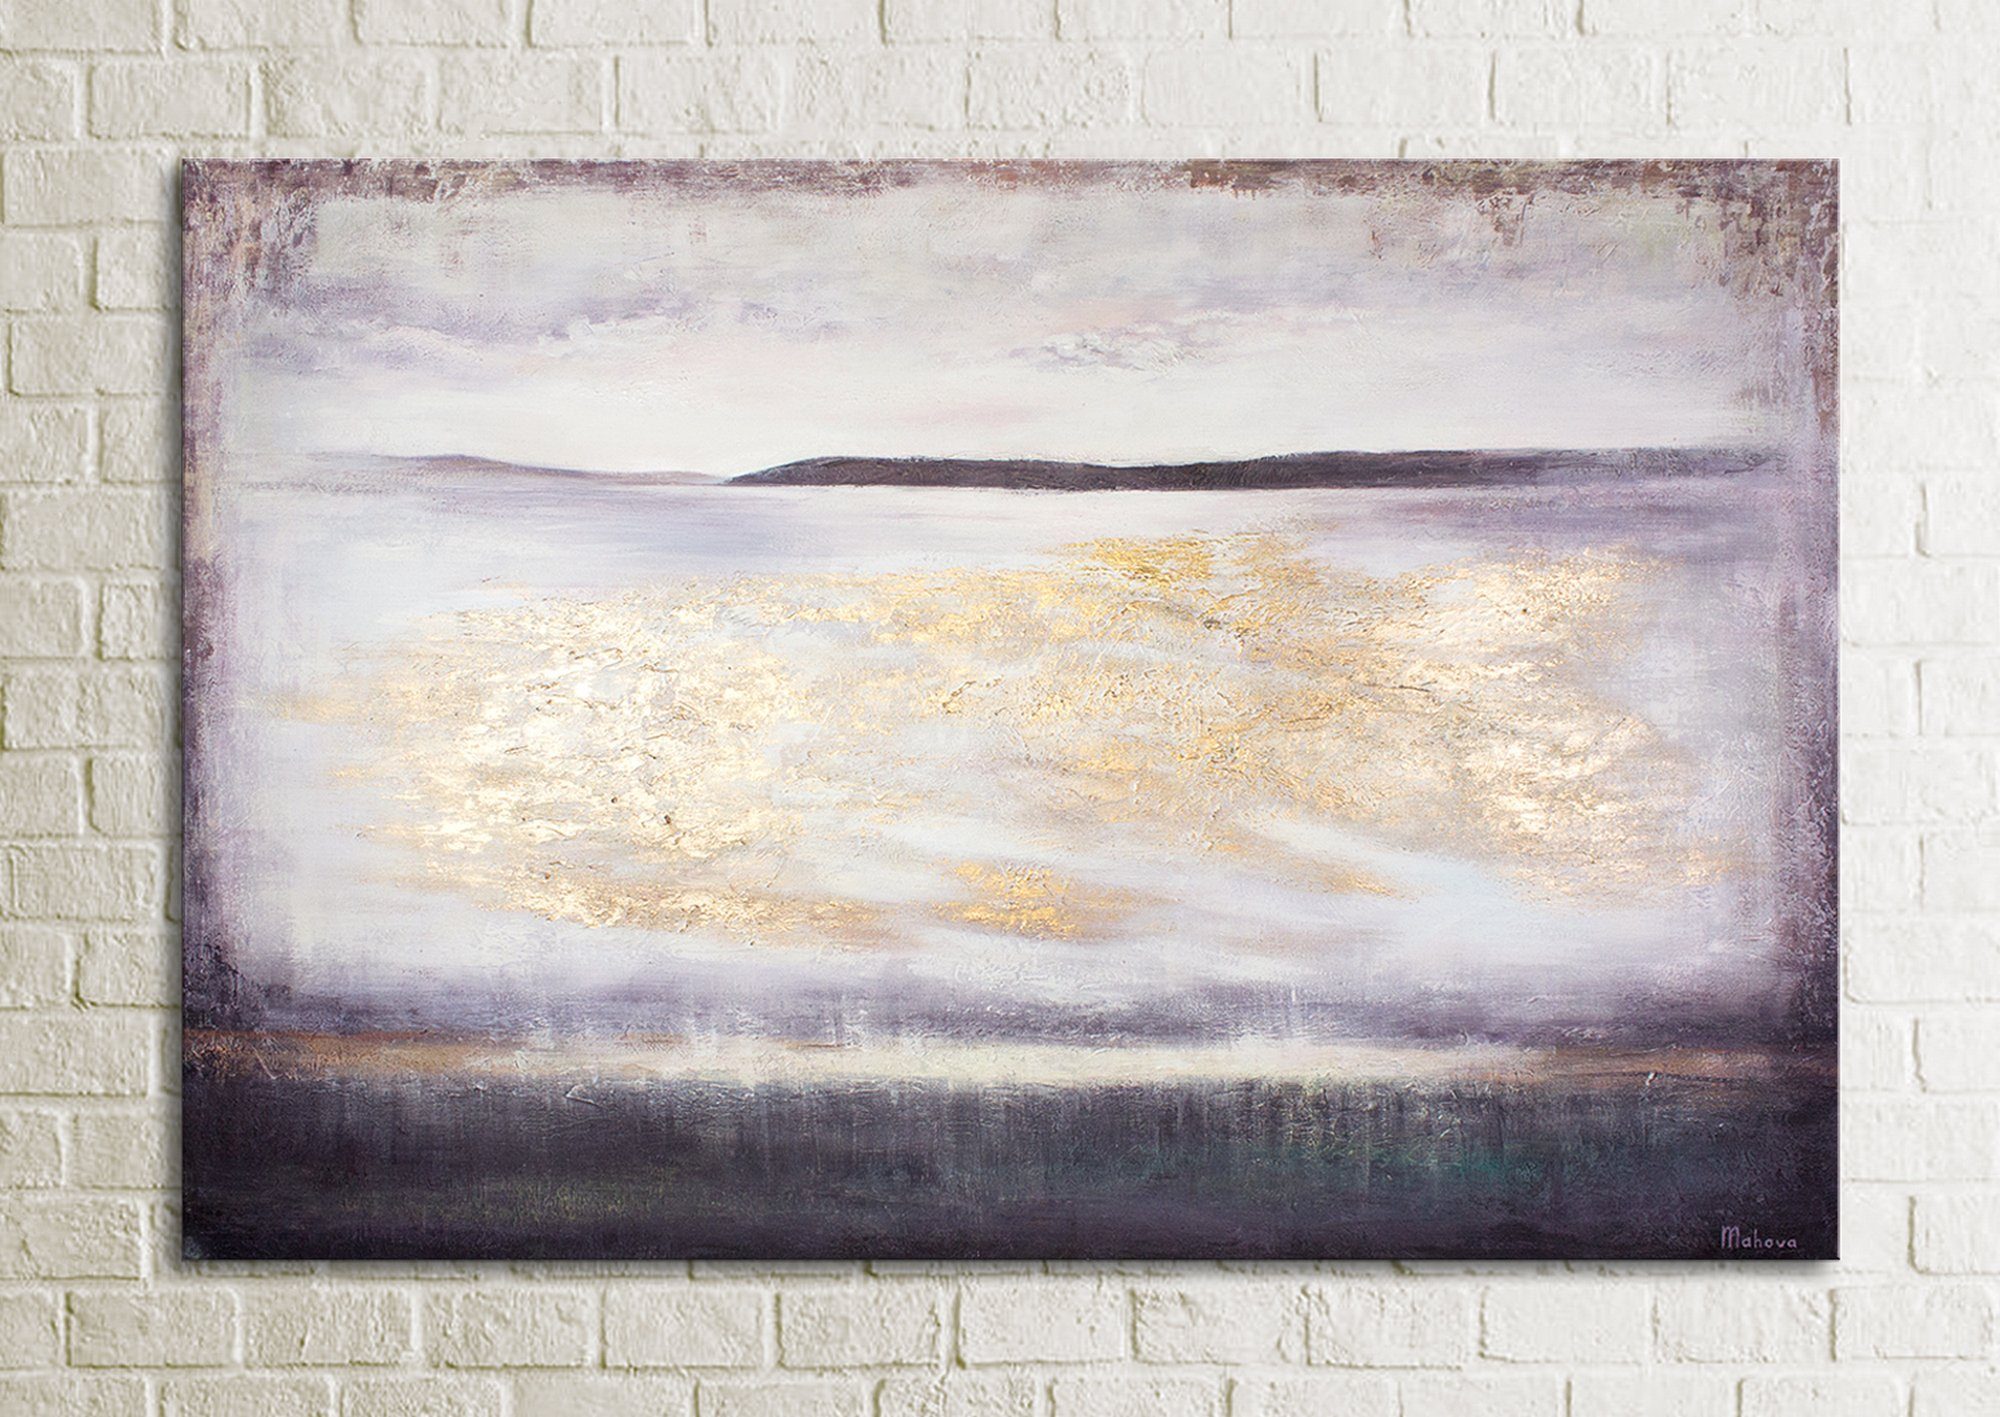 Gold Strand YS-Art Gemälde Landschaft, Handgemalt Geräumig, Wasser Leinwand Meer Bild